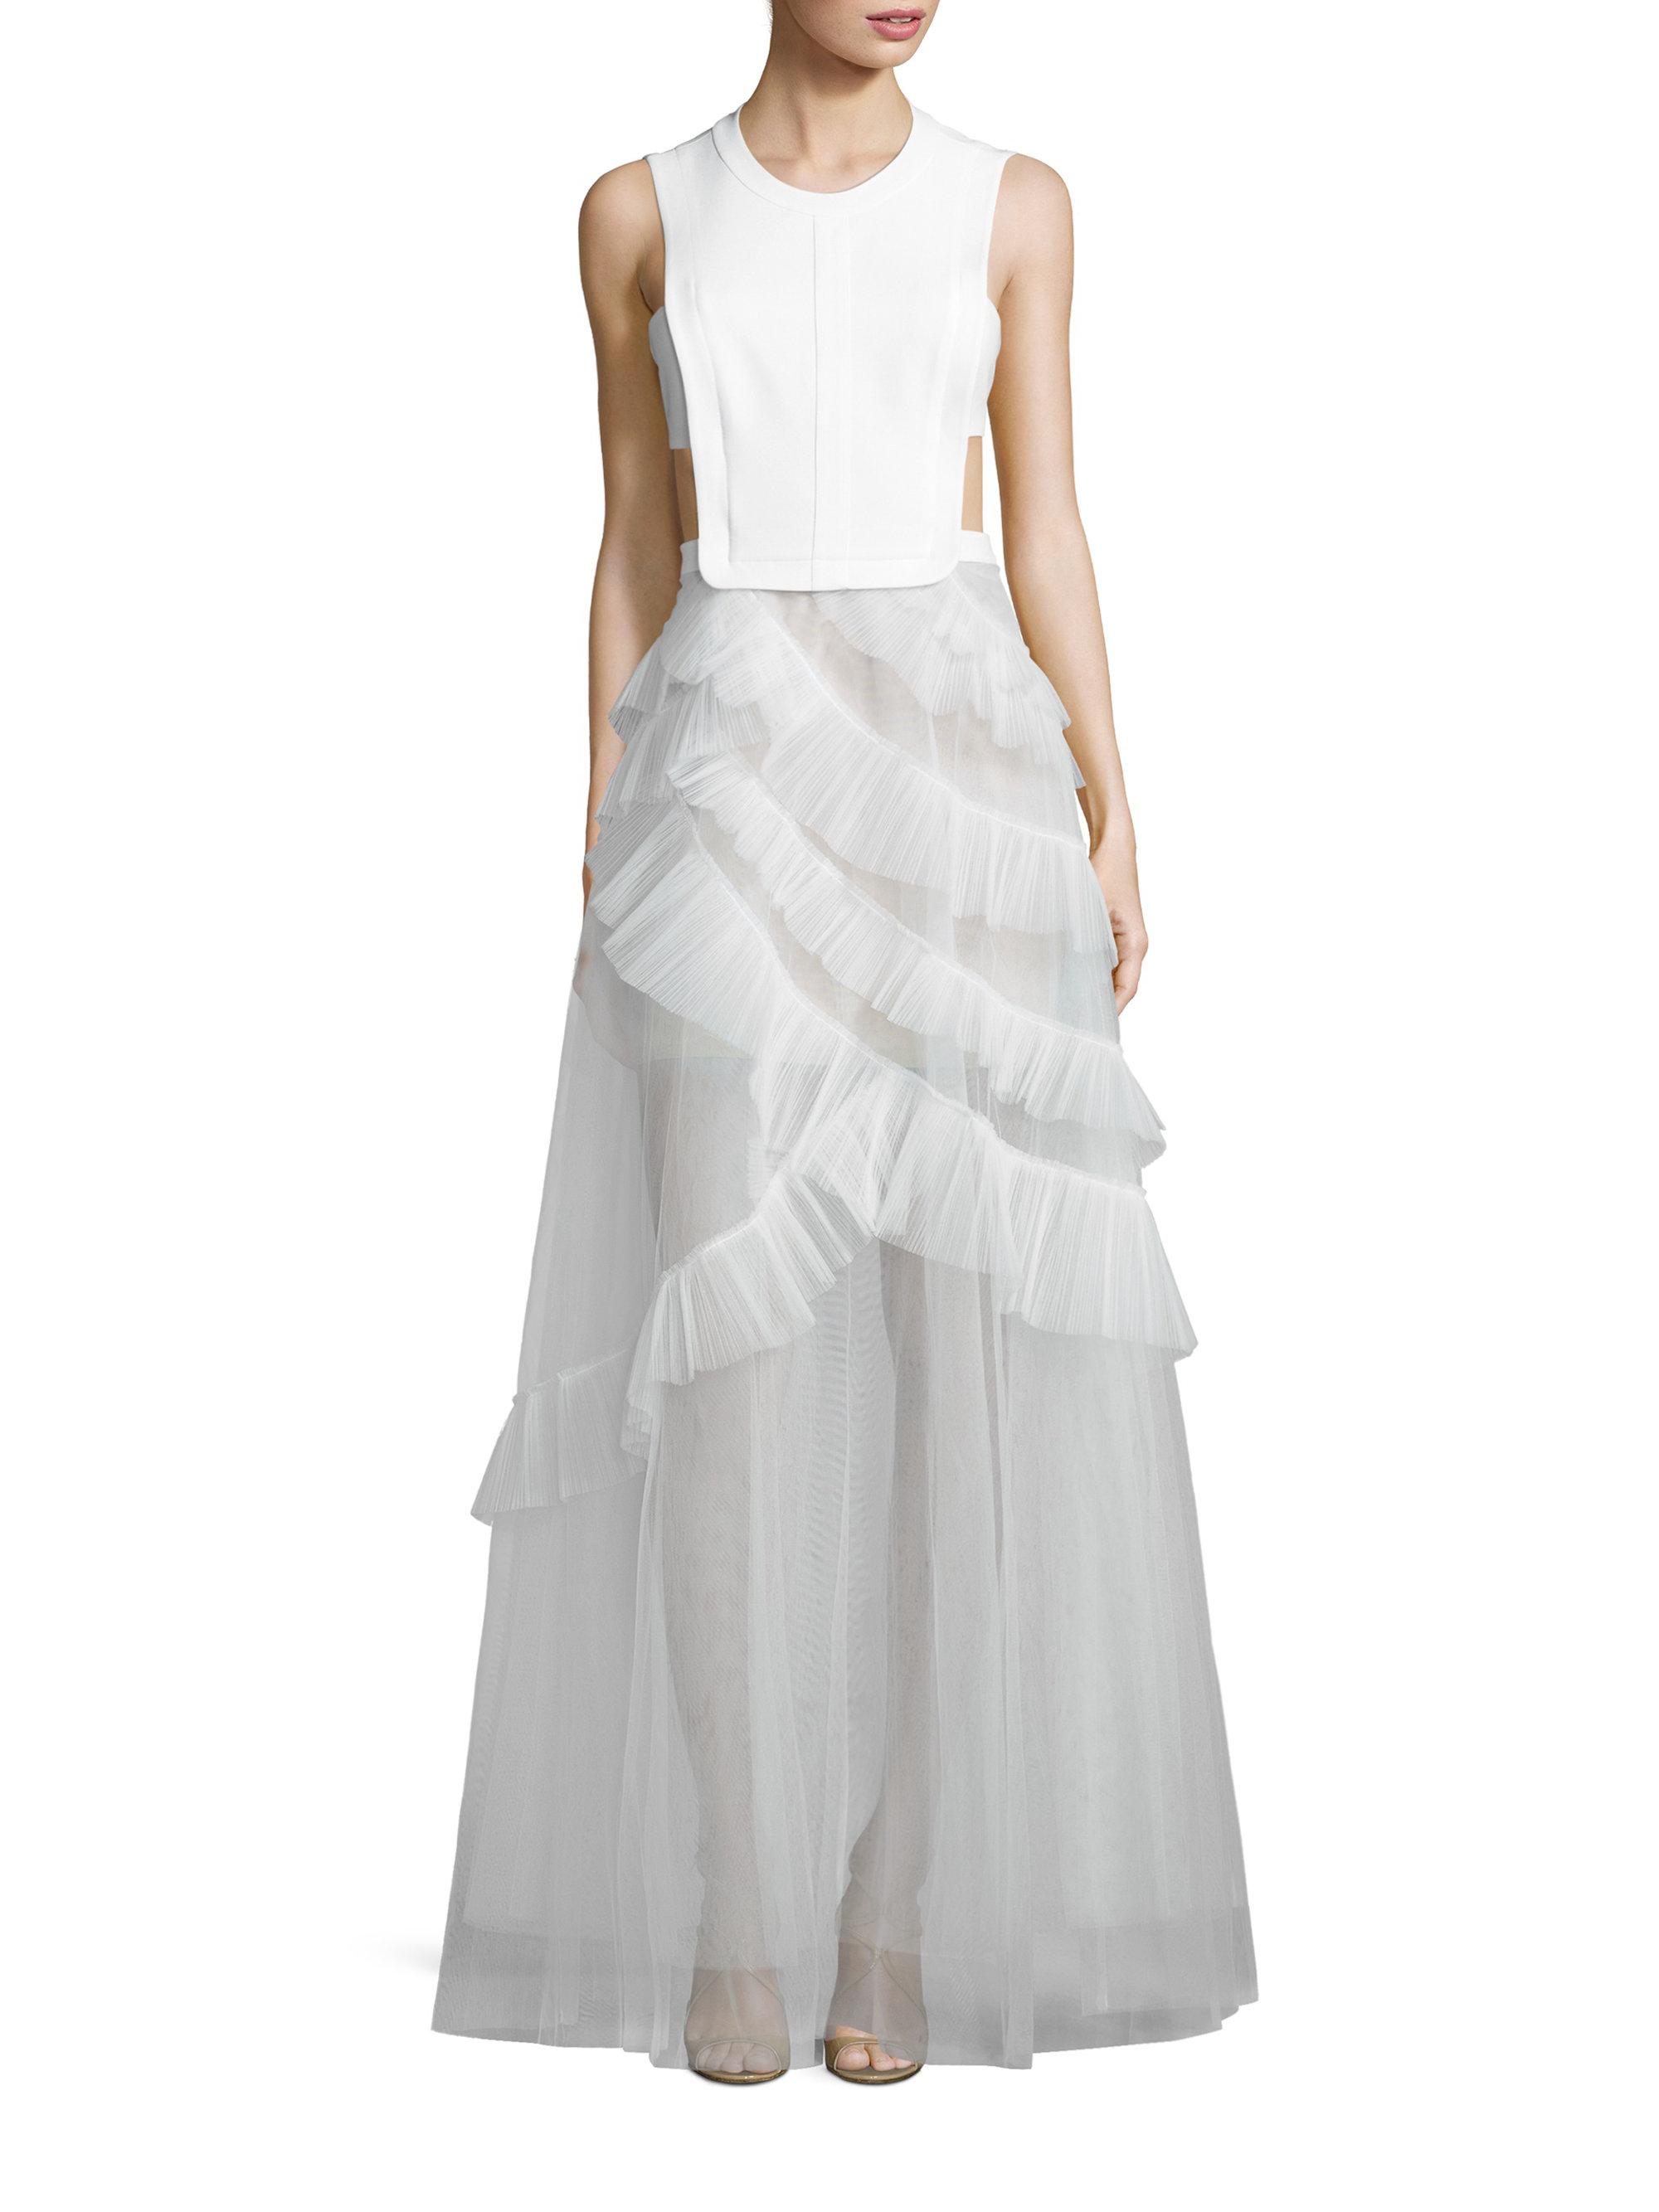 Lyst - Bcbgmaxazria Avalon Open-back Gown in White